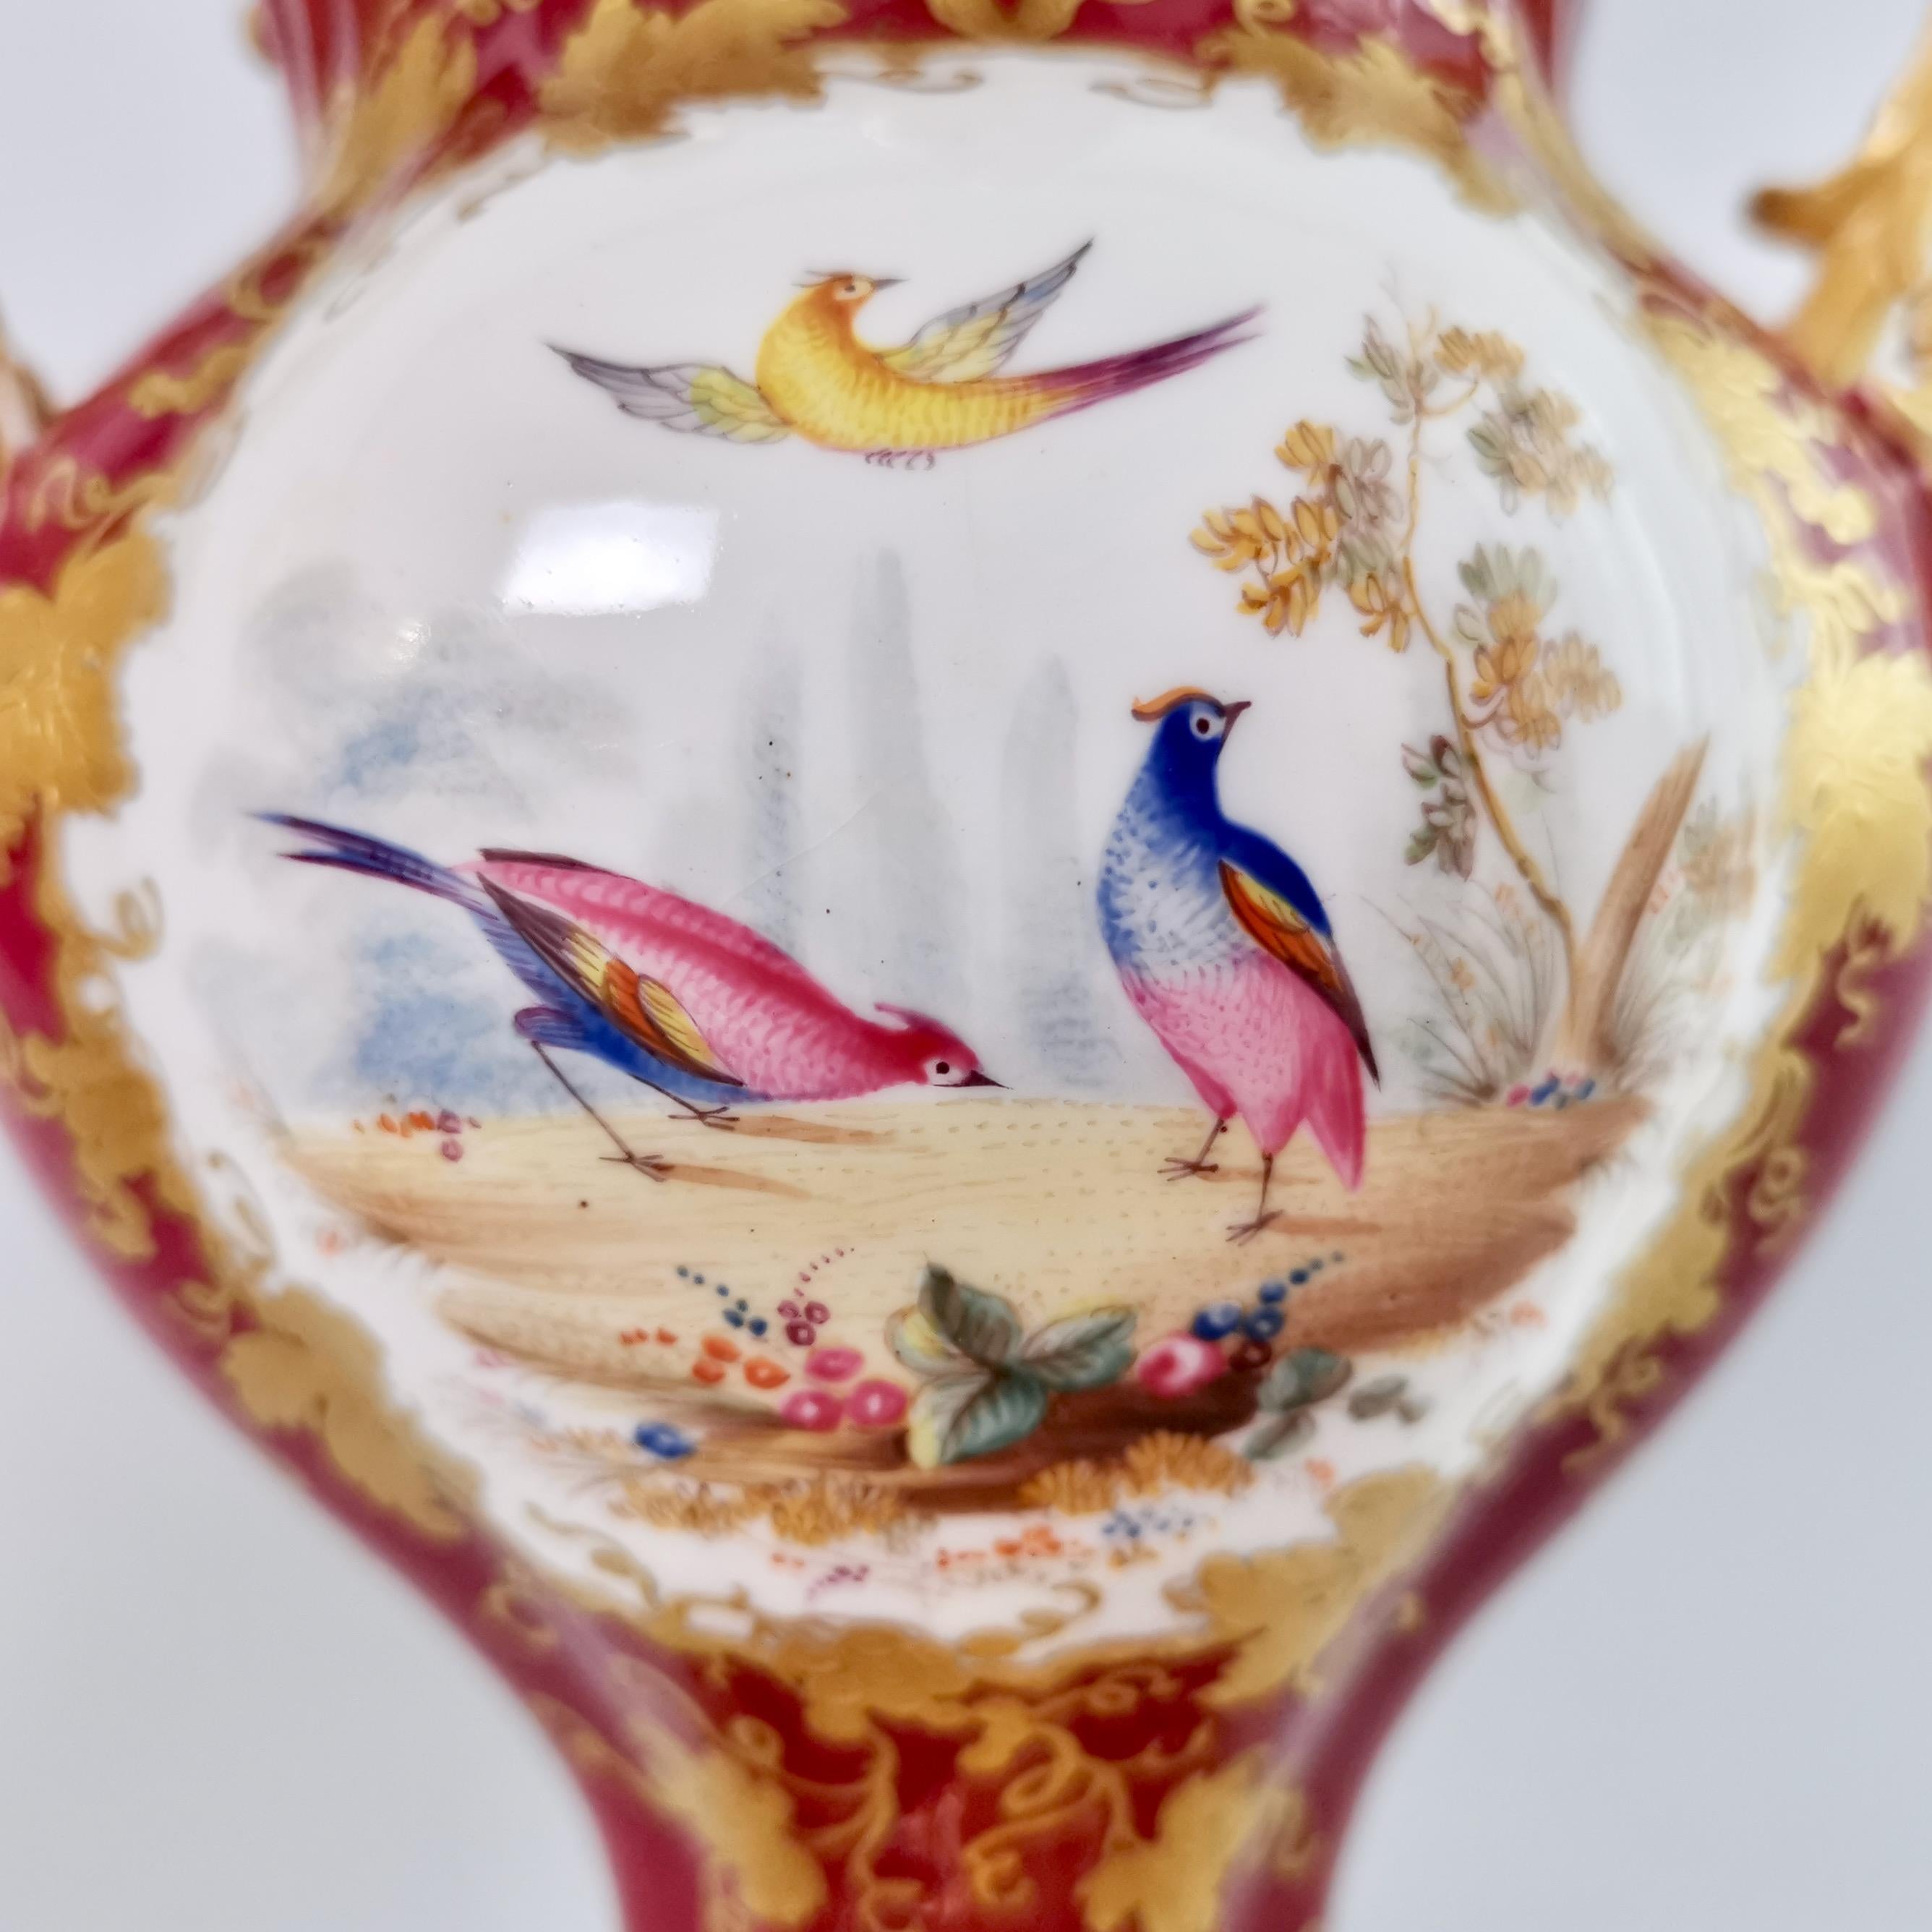 Mid-19th Century H&R Daniel Pair of Potpourri Vases, Maroon, Birds, Flowers, Rococo Revival c1840 For Sale